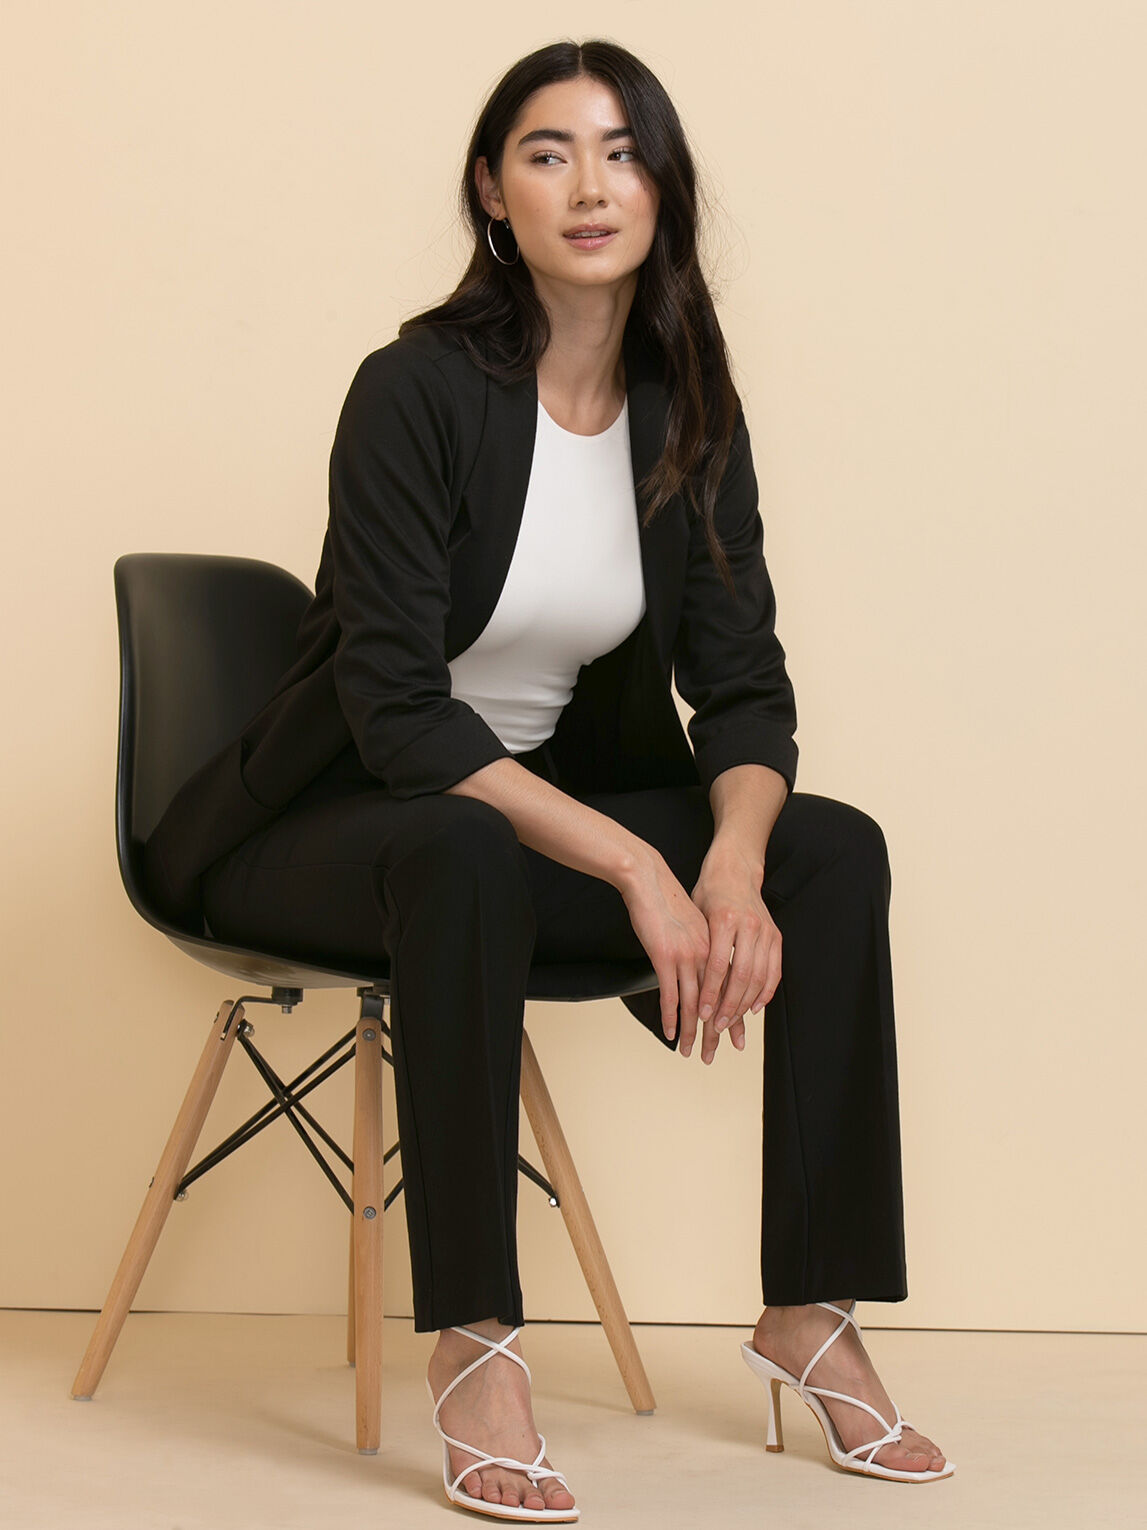 Shop Women's Pants - White, Black, Ankle, Dress | White House Black Market